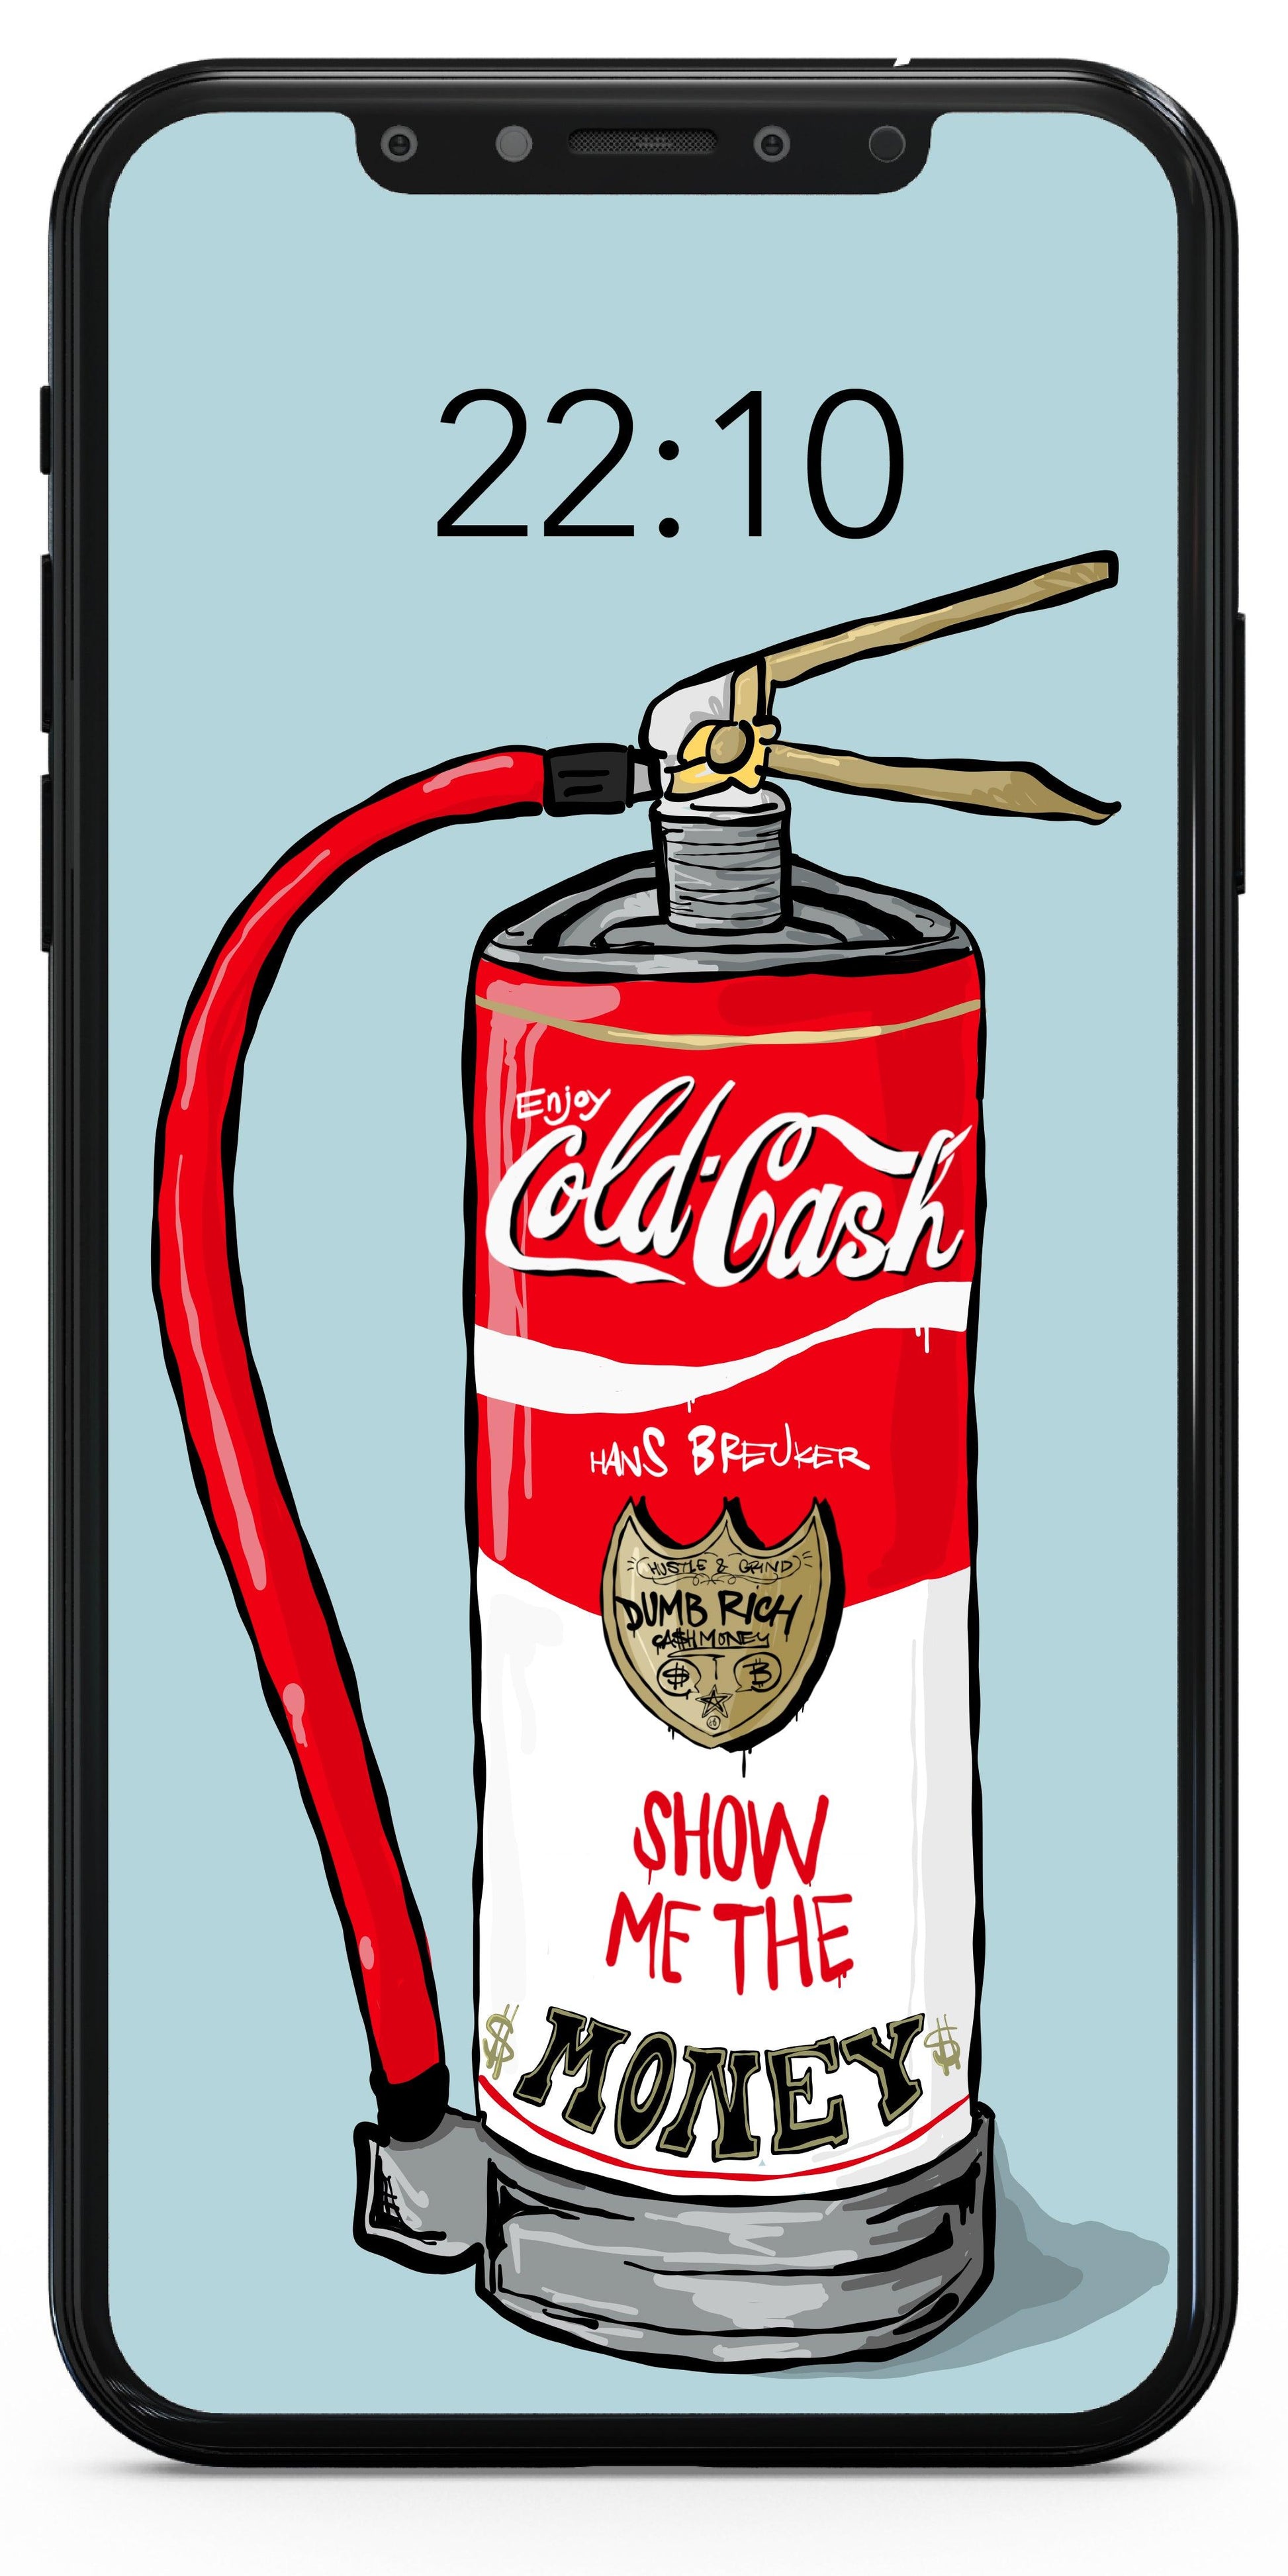 Extinguisher pop art - Hans Breuker